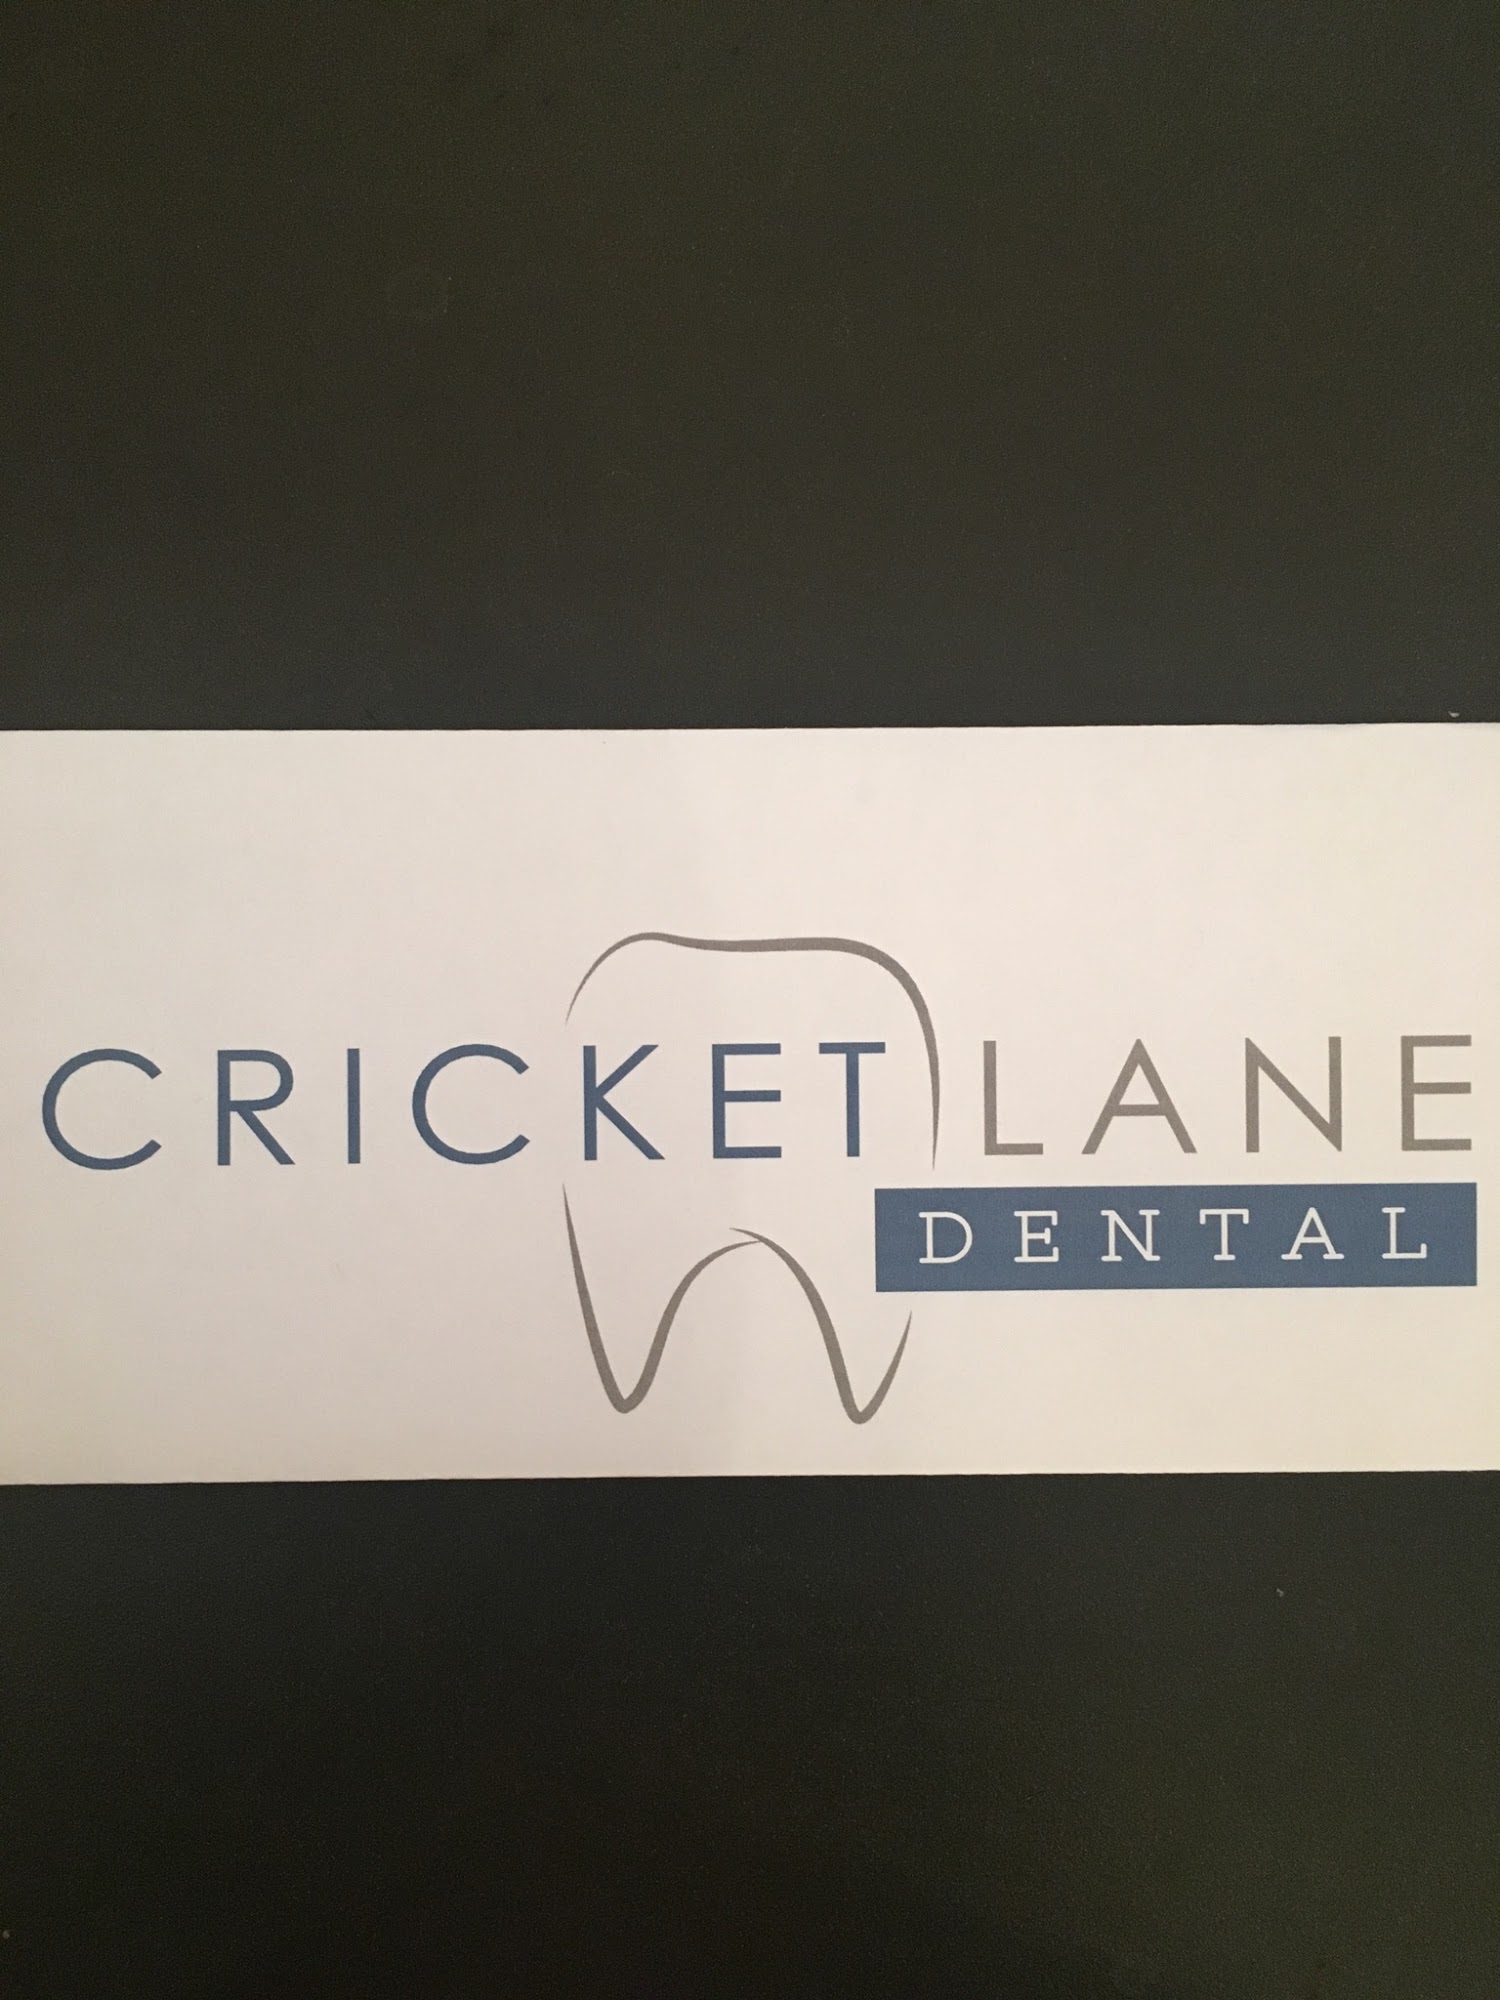 Cricket Lane Dental